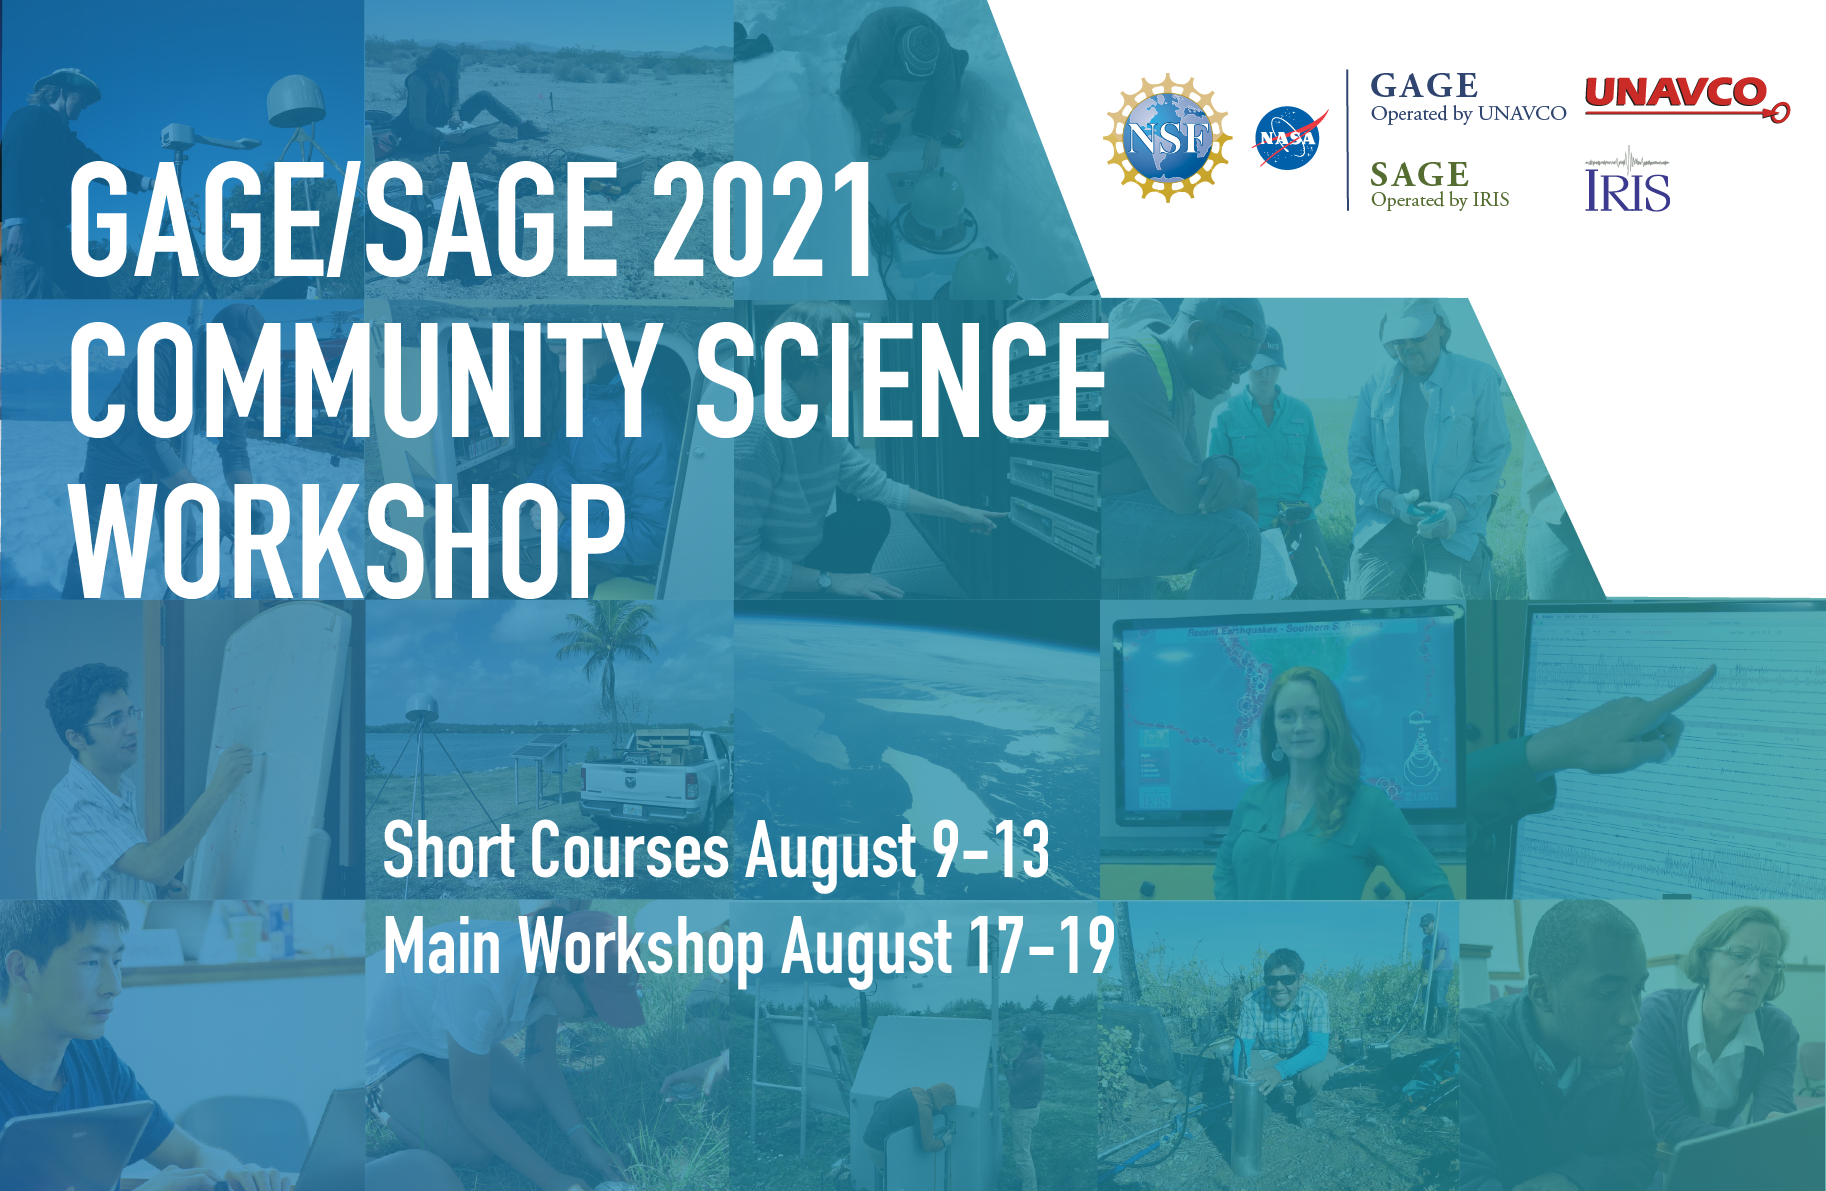 graphic for gage/sage 2021 community science workshop